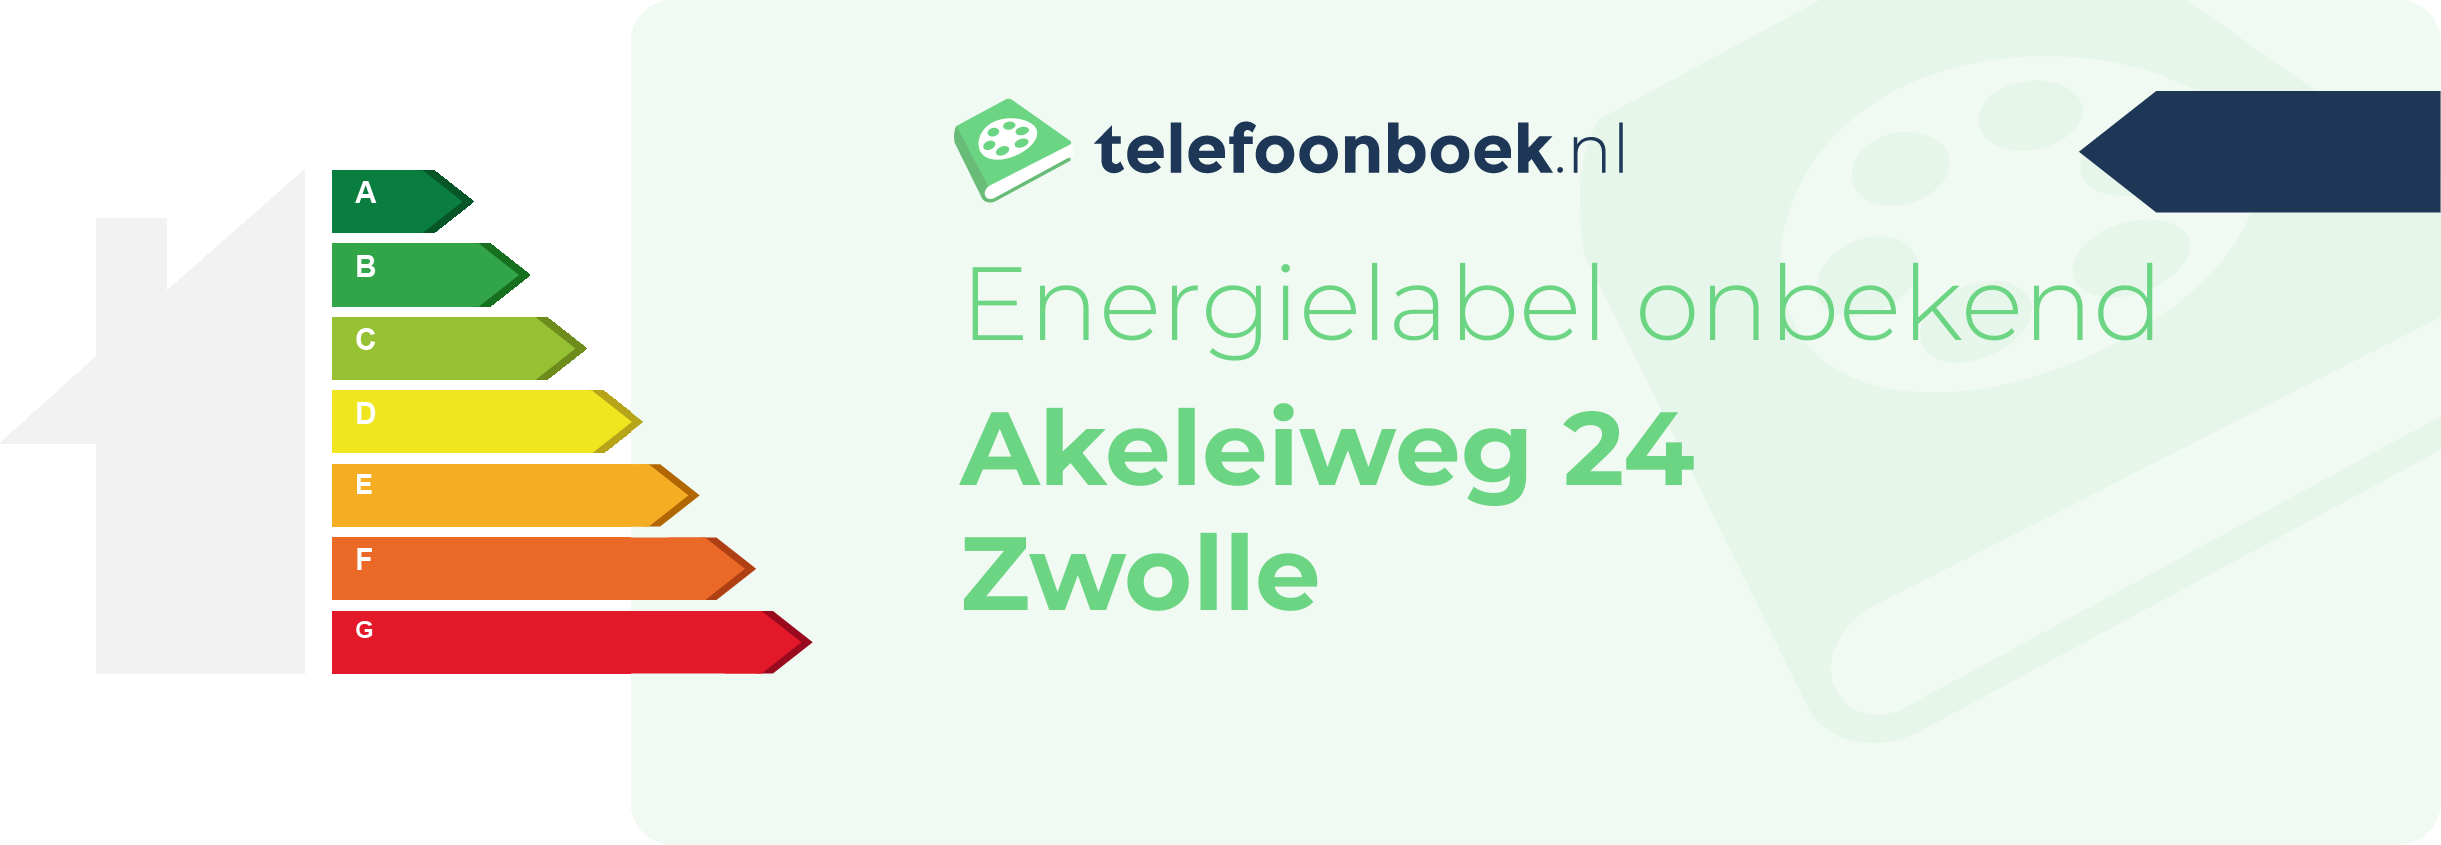 Energielabel Akeleiweg 24 Zwolle